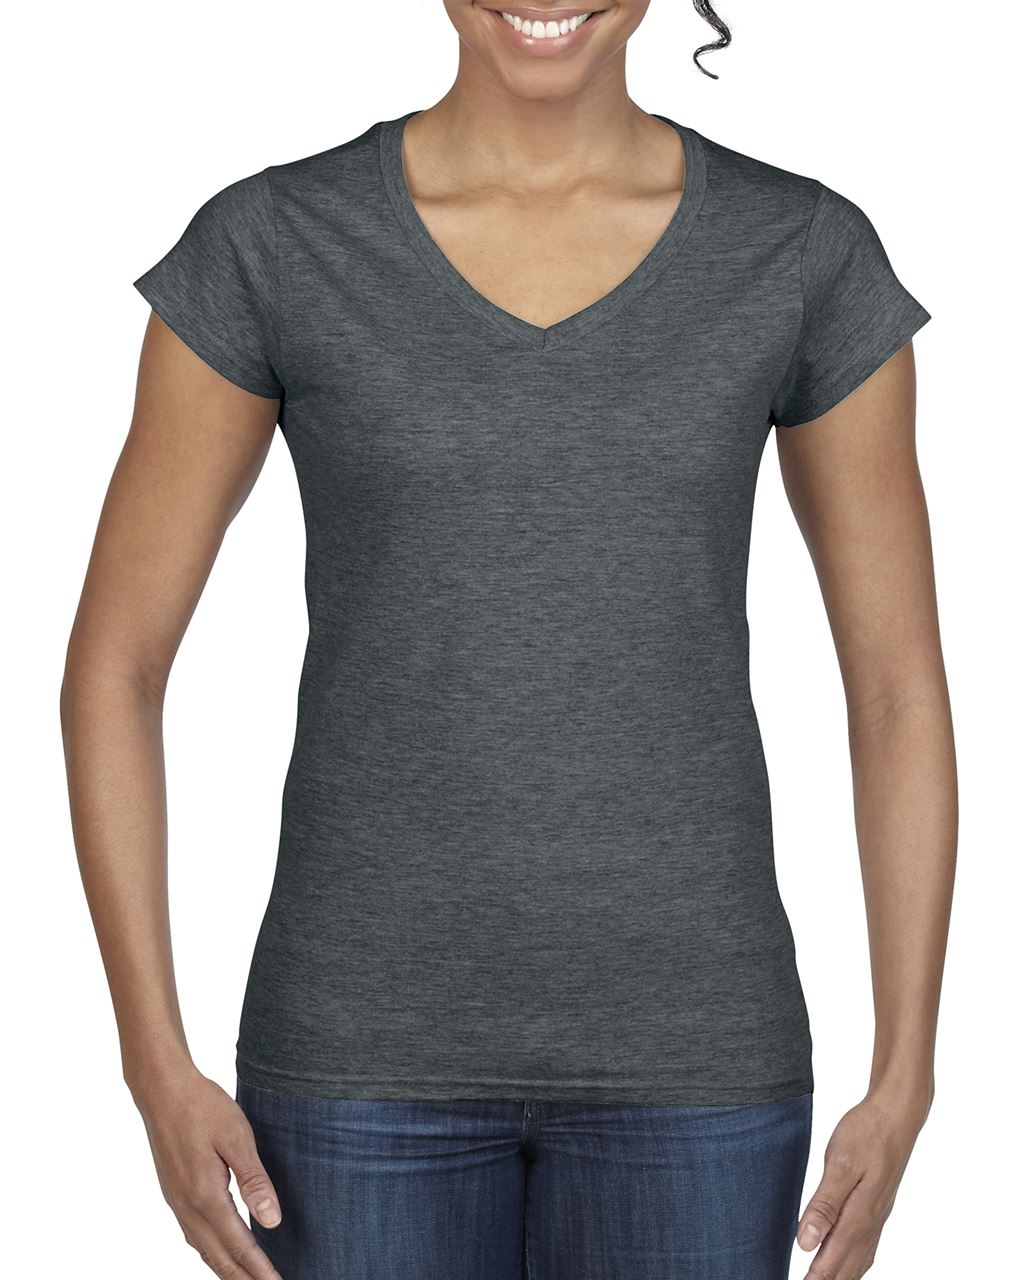 Gildan Softstyle® Ladies' V-neck T-shirt - grey